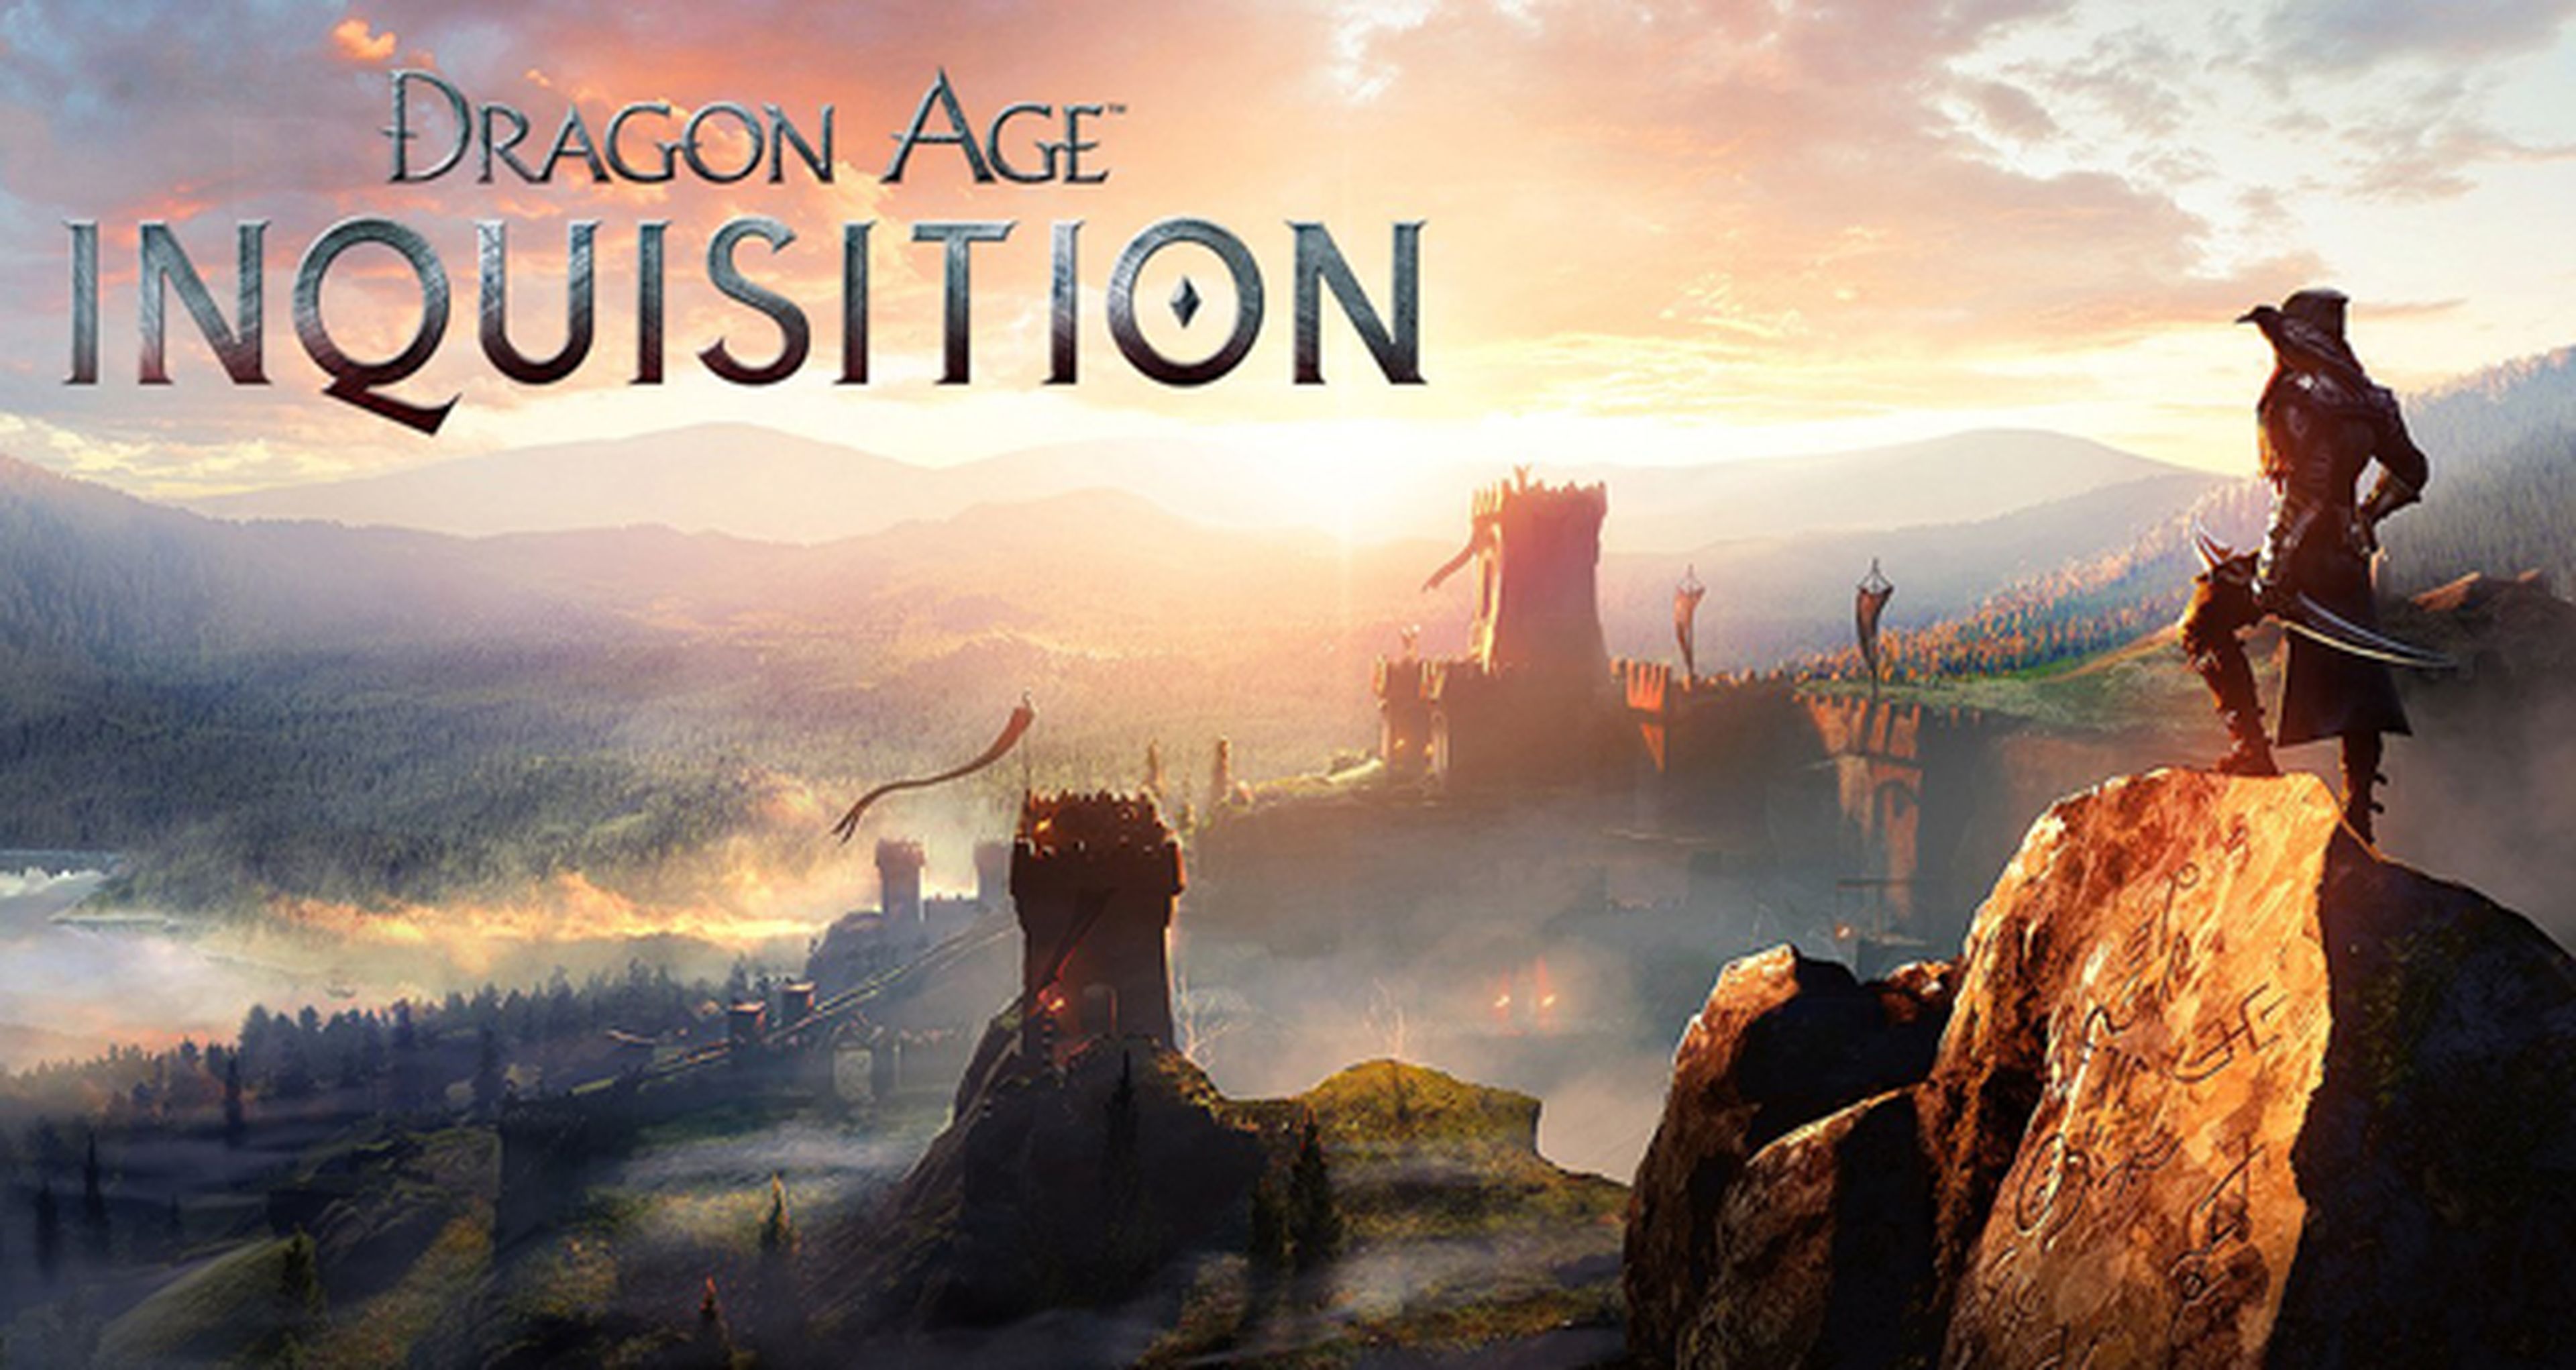 Buscando por dragon+age+inquisition